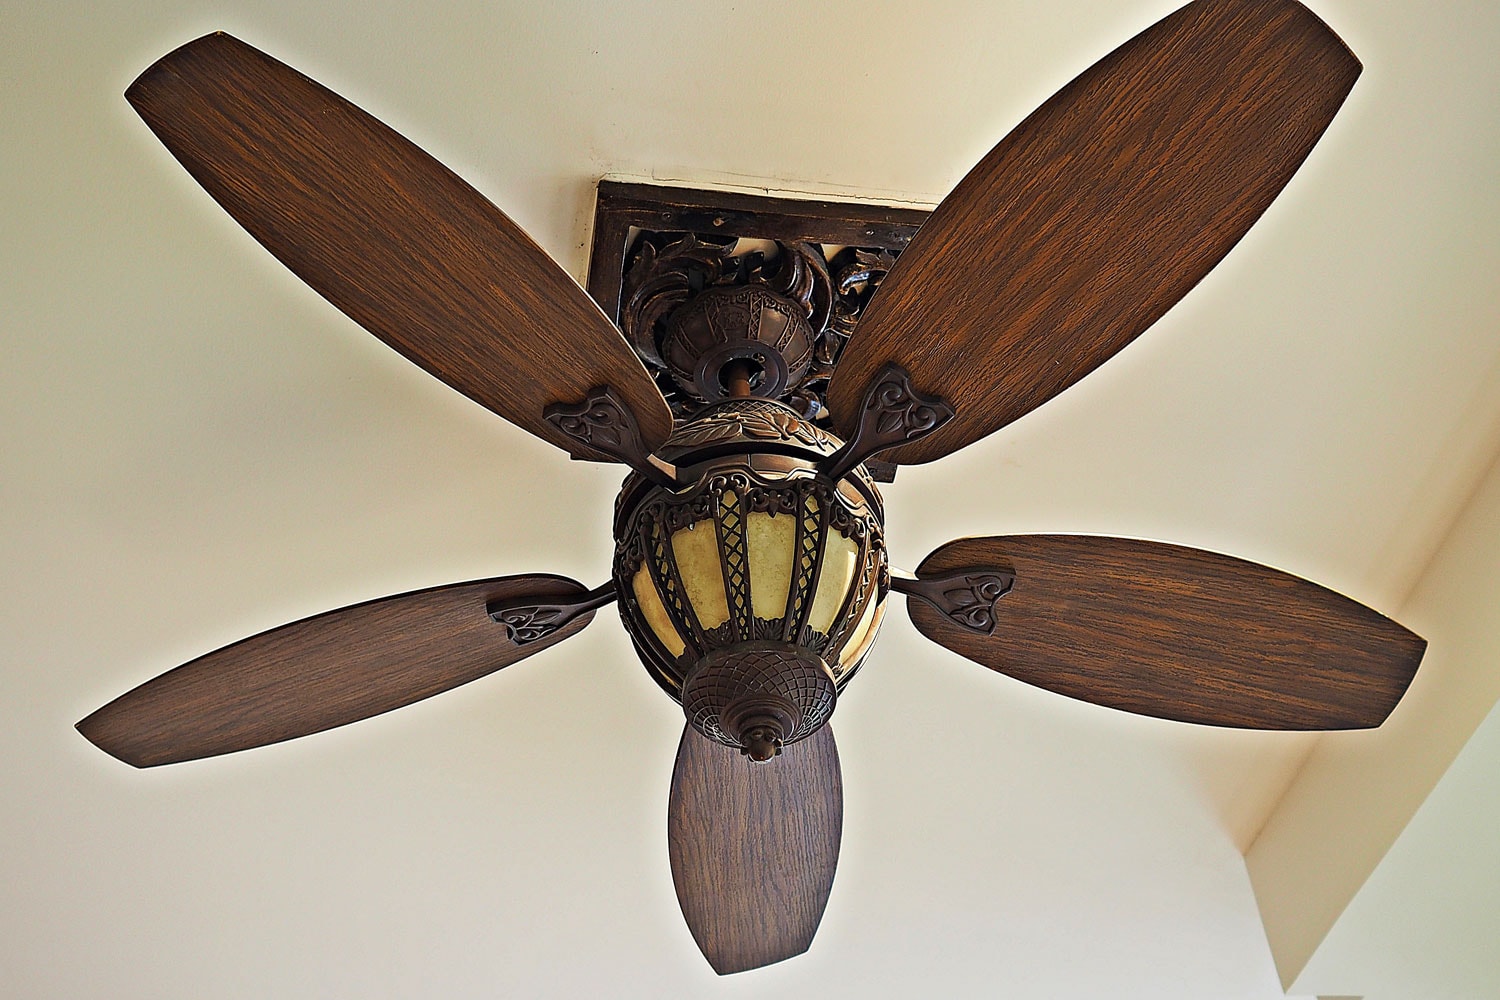 A brown wooden ceiling fan inside a big living area